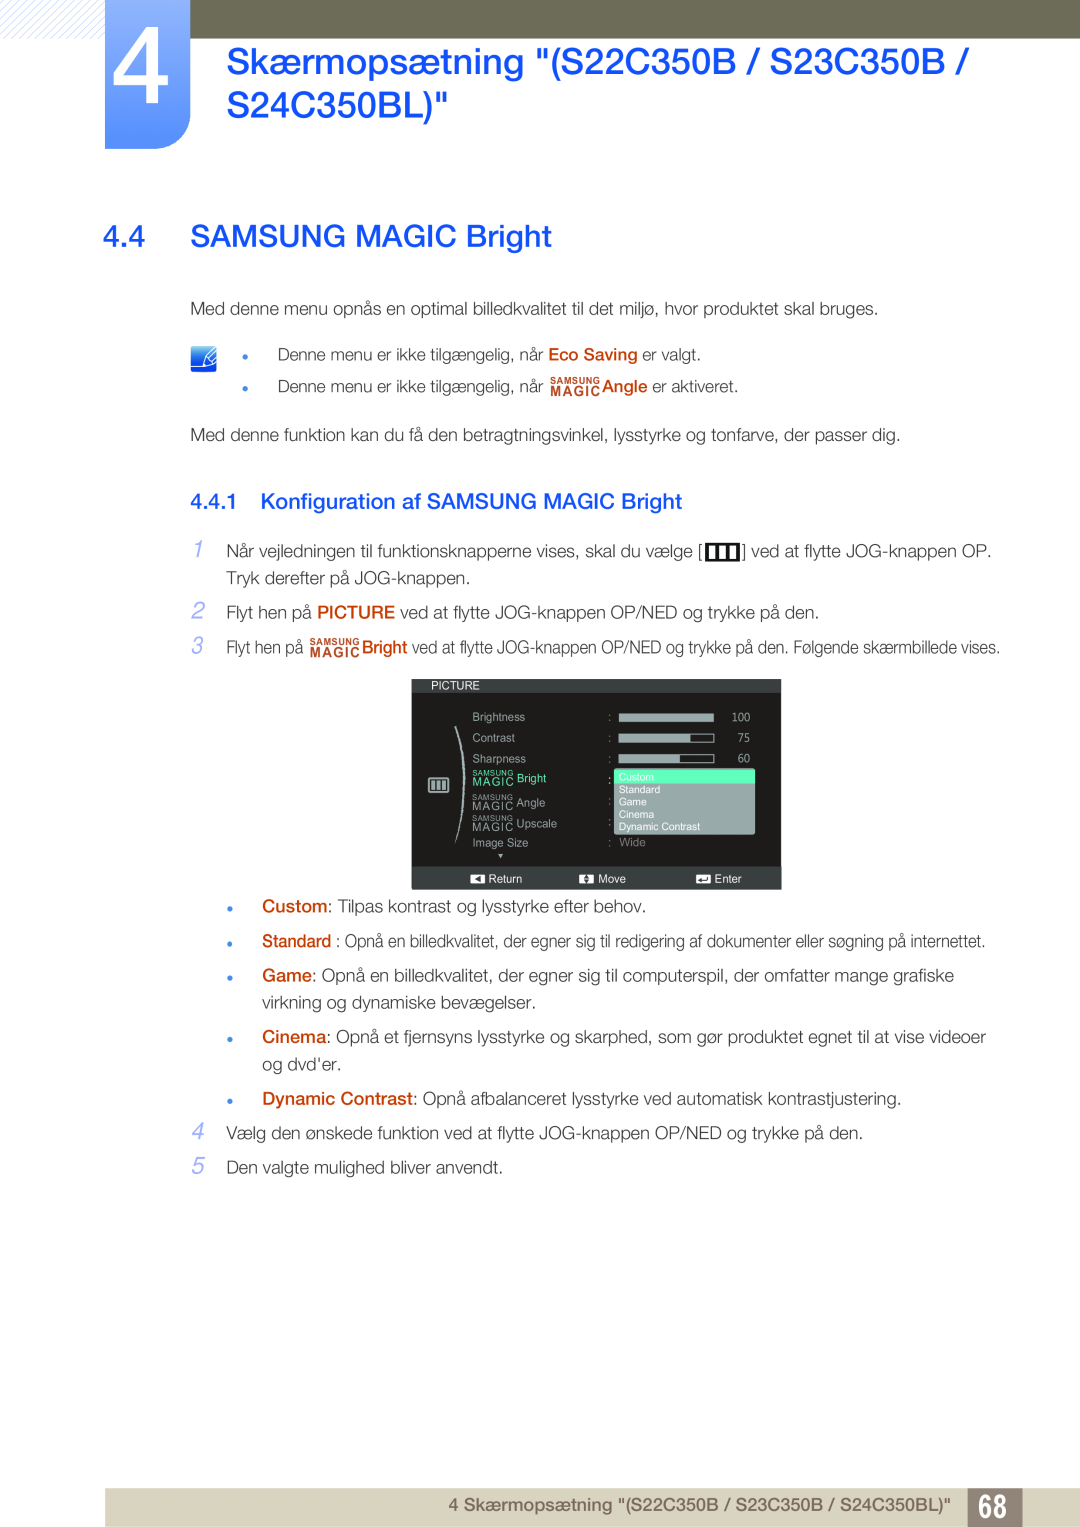 Samsung LS22C350HS/EN manual Konfiguration af SAMSUNG MAGIC Bright, 4 SkærmopsætningS24C350BL S22C350B / S23C350B 